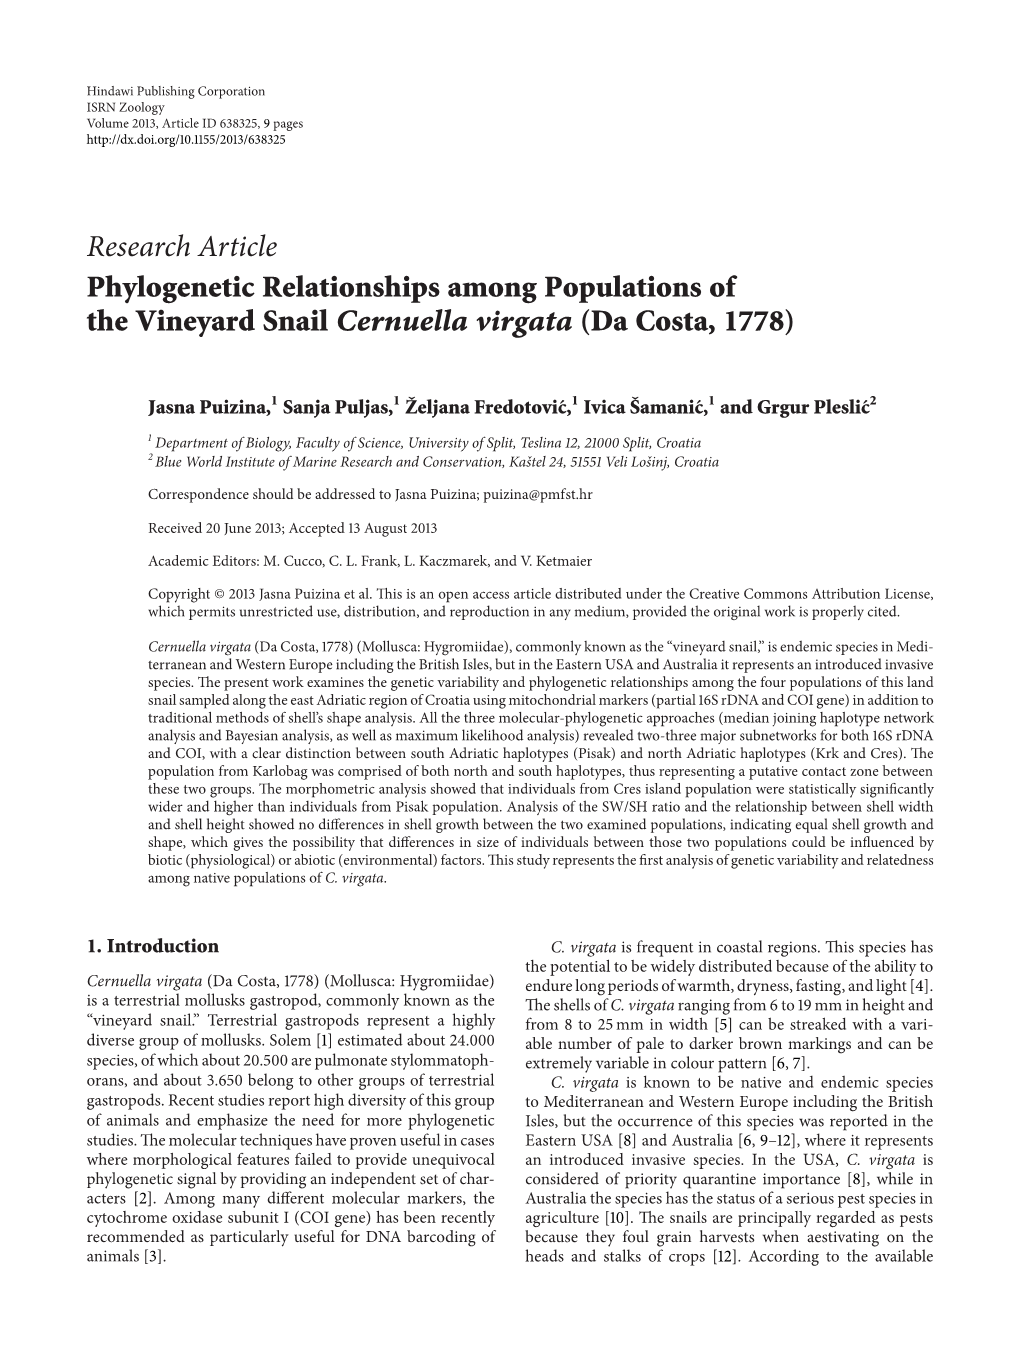 Phylogenetic Relationships Among Populations of the Vineyard Snail Cernuella Virgata (Da Costa, 1778)